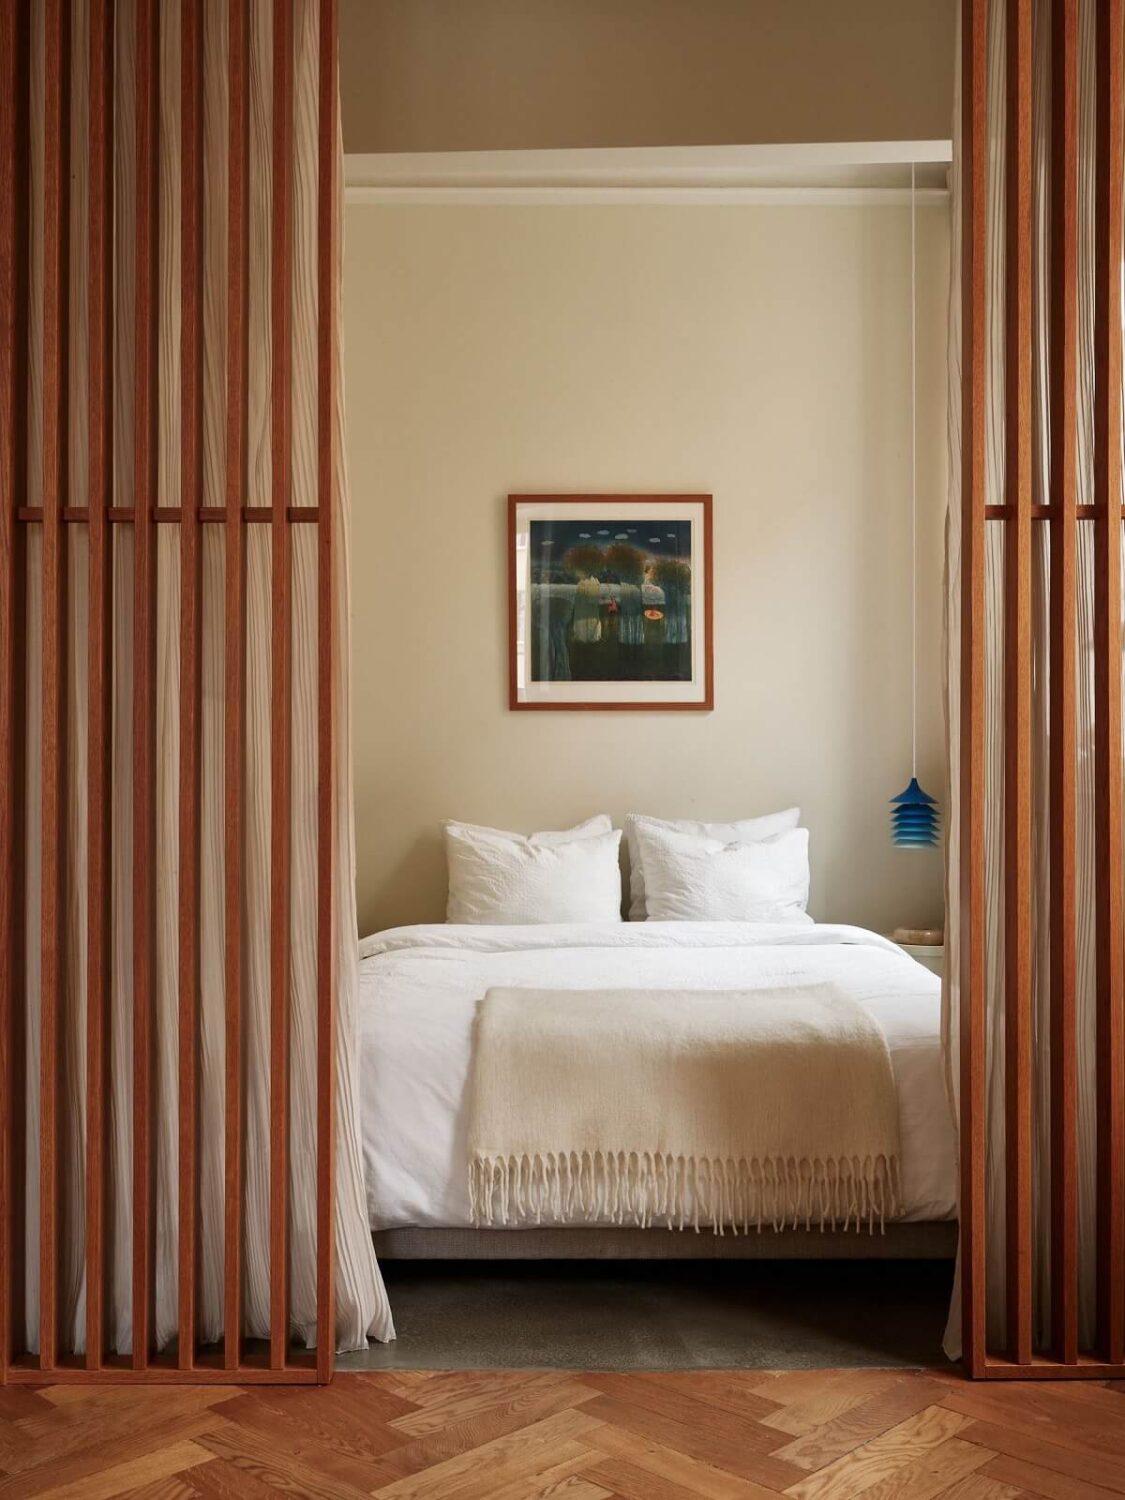 studio-apartment-room-divider-ideas-wood-slats-curtain-nordroom